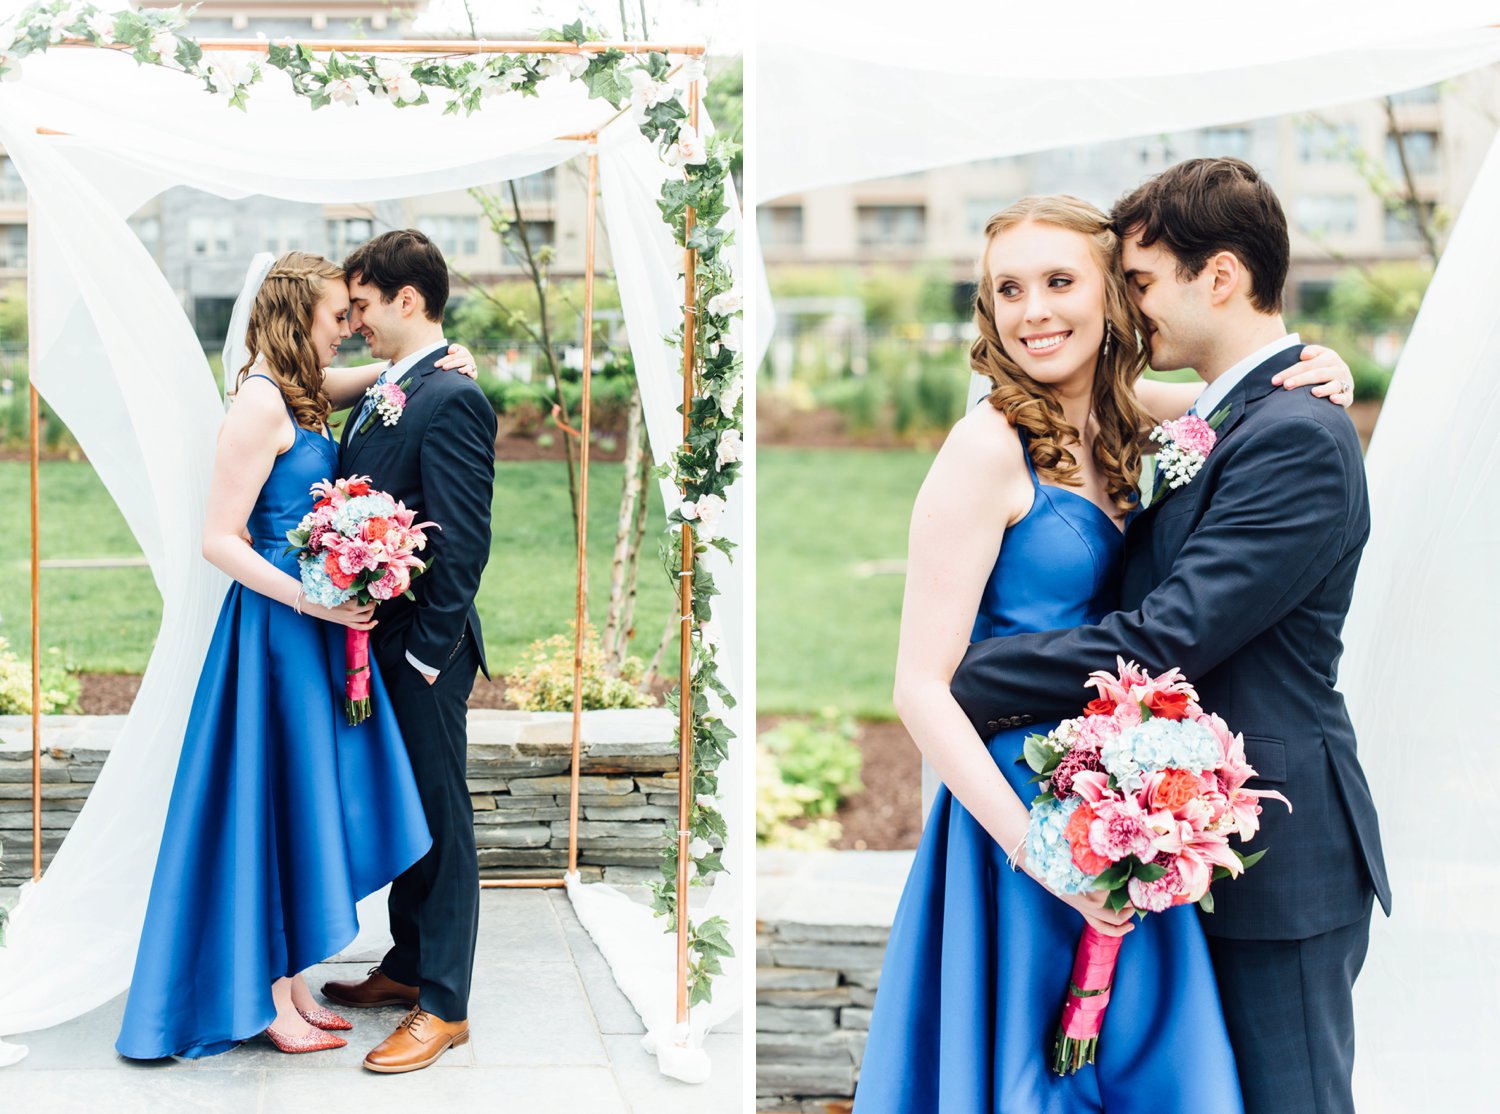 Anna + Mike - King of Prussia Coronavirus Elopement - Philadelphia Wedding Photographer - Alison Dunn Photography photo